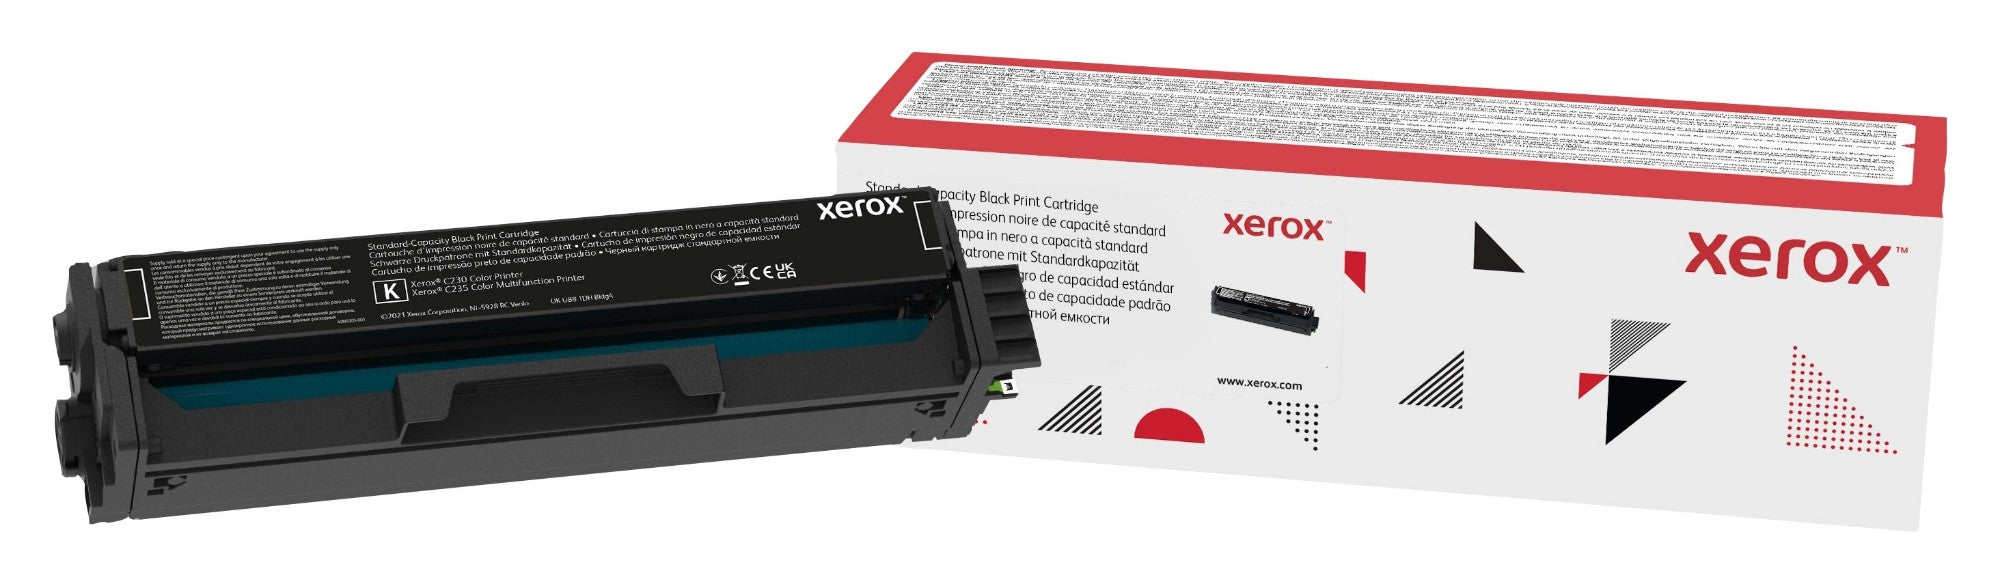 Xerox 006R04383 Toner cartridge black, 1.5K pages ISO/IEC 19752 for Xerox C 230